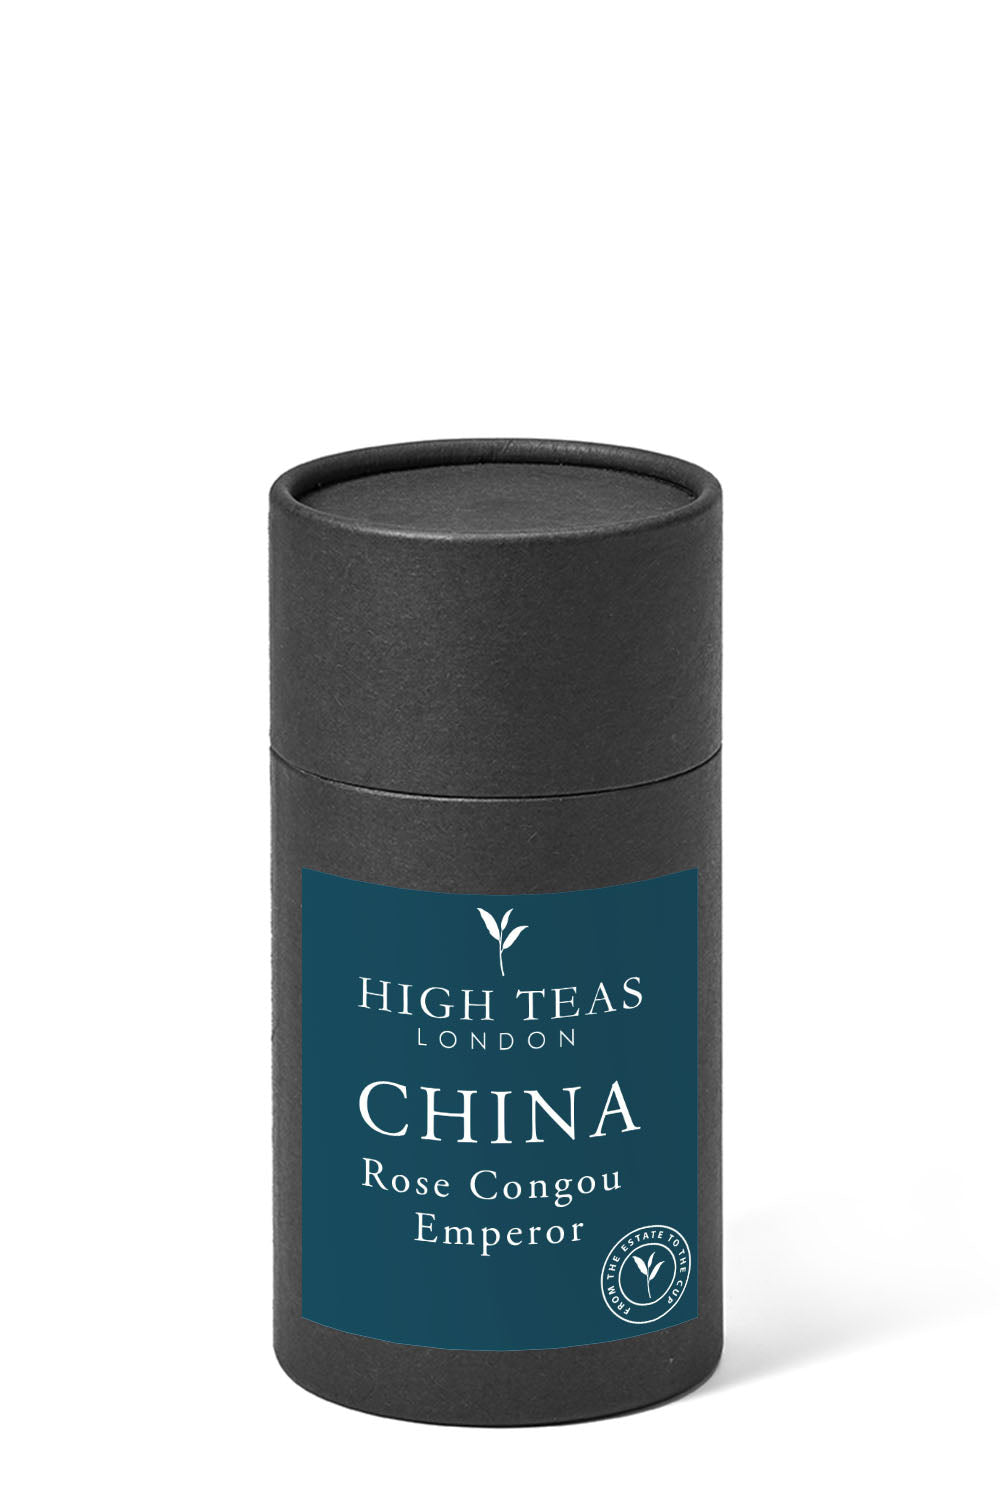 Rose Congou Emperor-60g gift-Loose Leaf Tea-High Teas